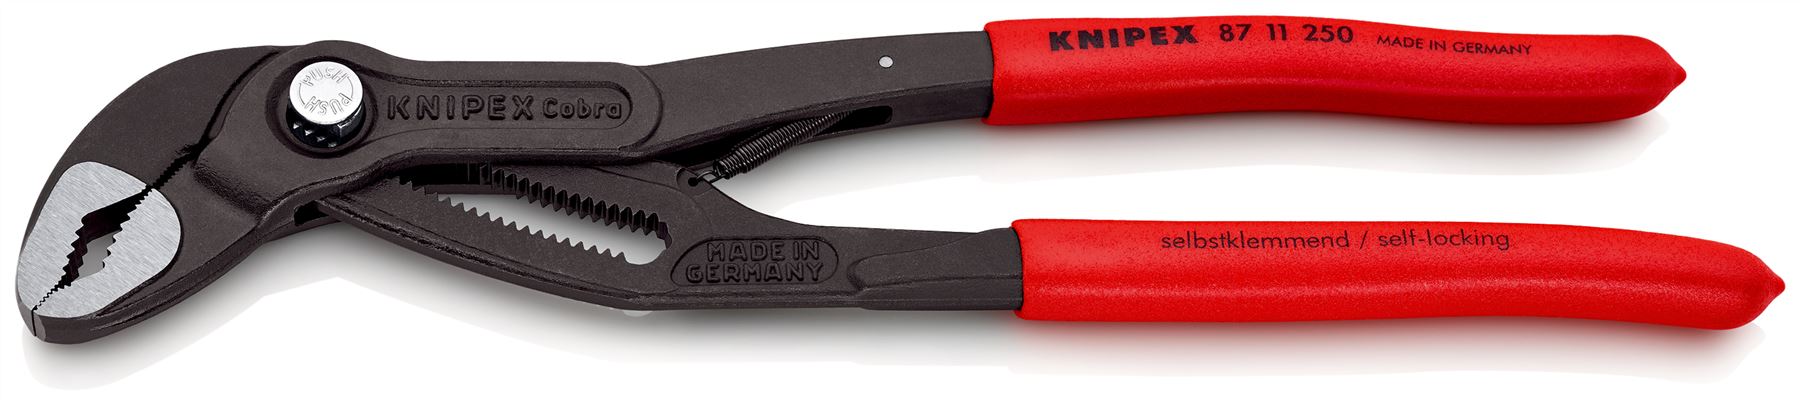 KNIPEX Cobra…matic Water Pump Pliers Automatic Adjustment 250mm Plastic Coated Handles Non Slip 87 11 250 SB